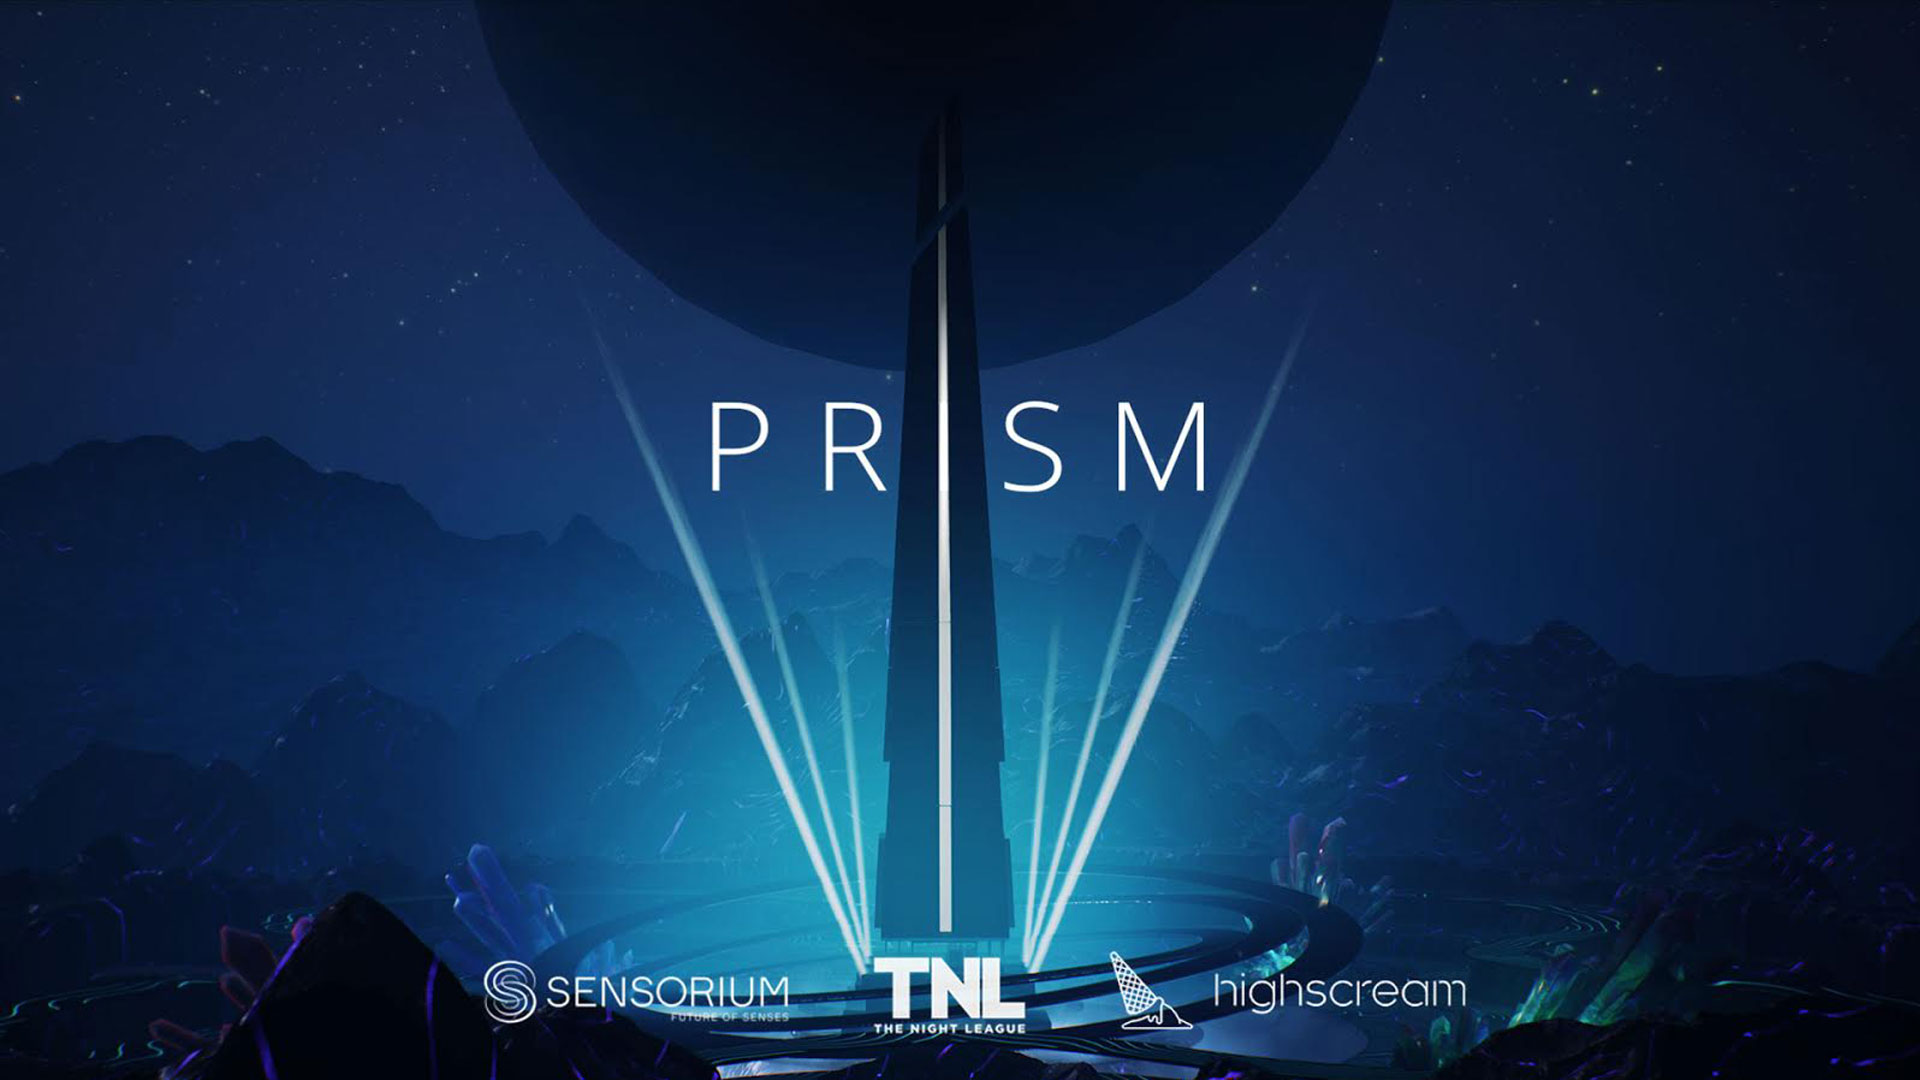 Sensorium Corporation unveils first look at VR world PRISM